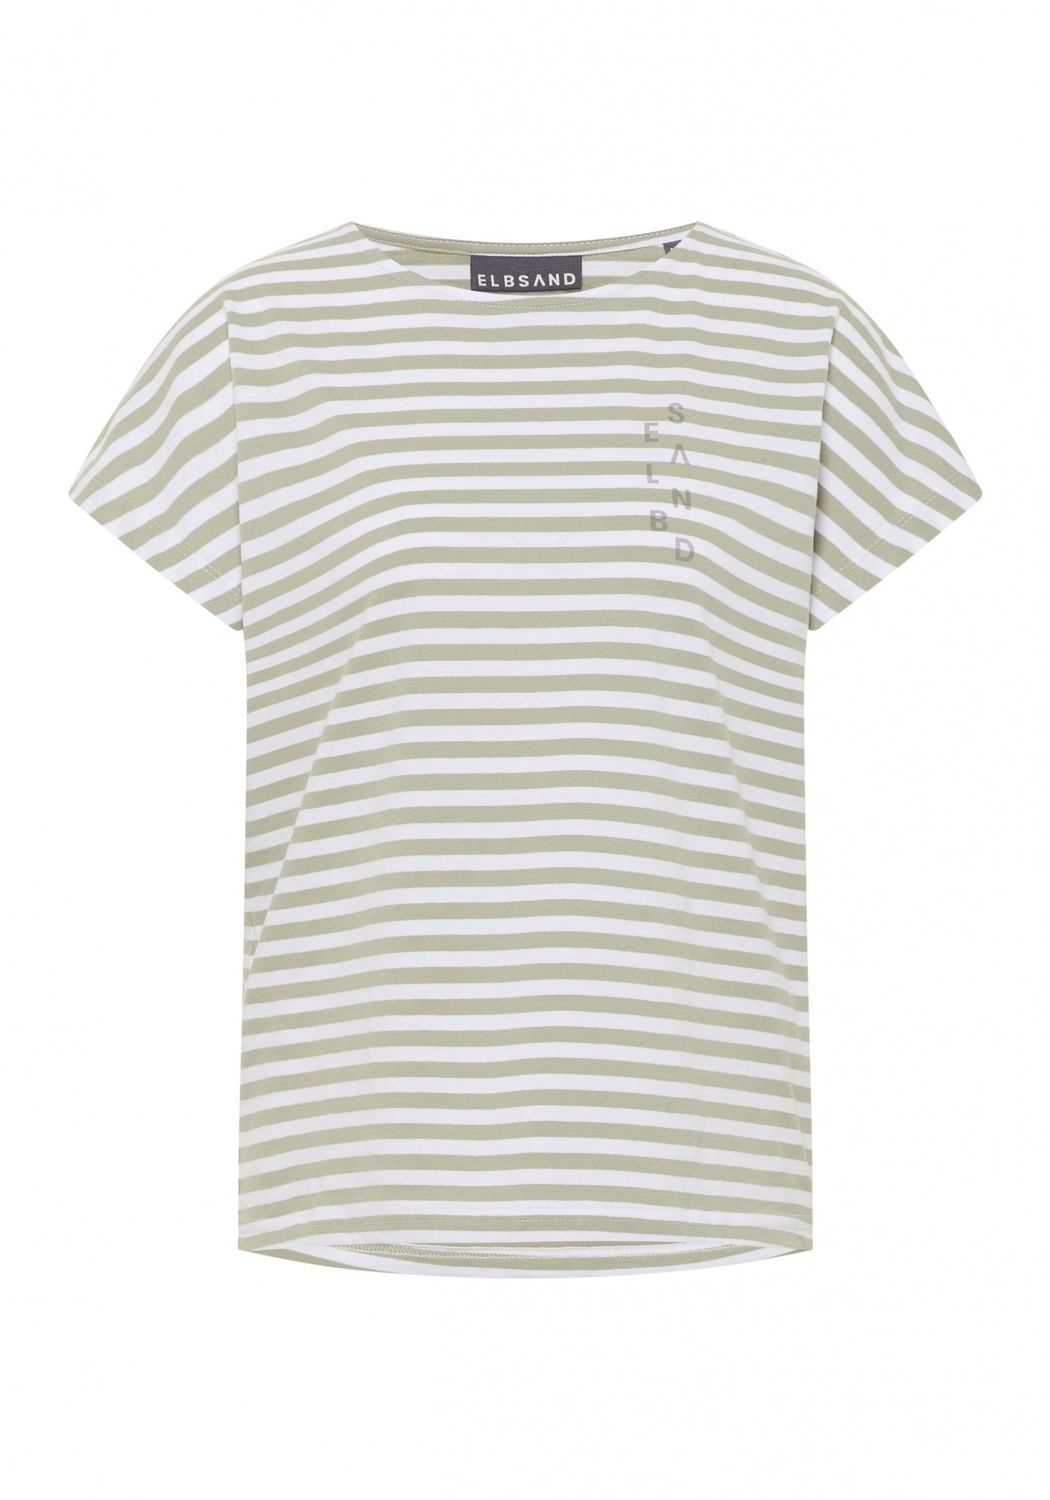 Elbsand Selma T-Shirt khaki+bright white, Größe: S